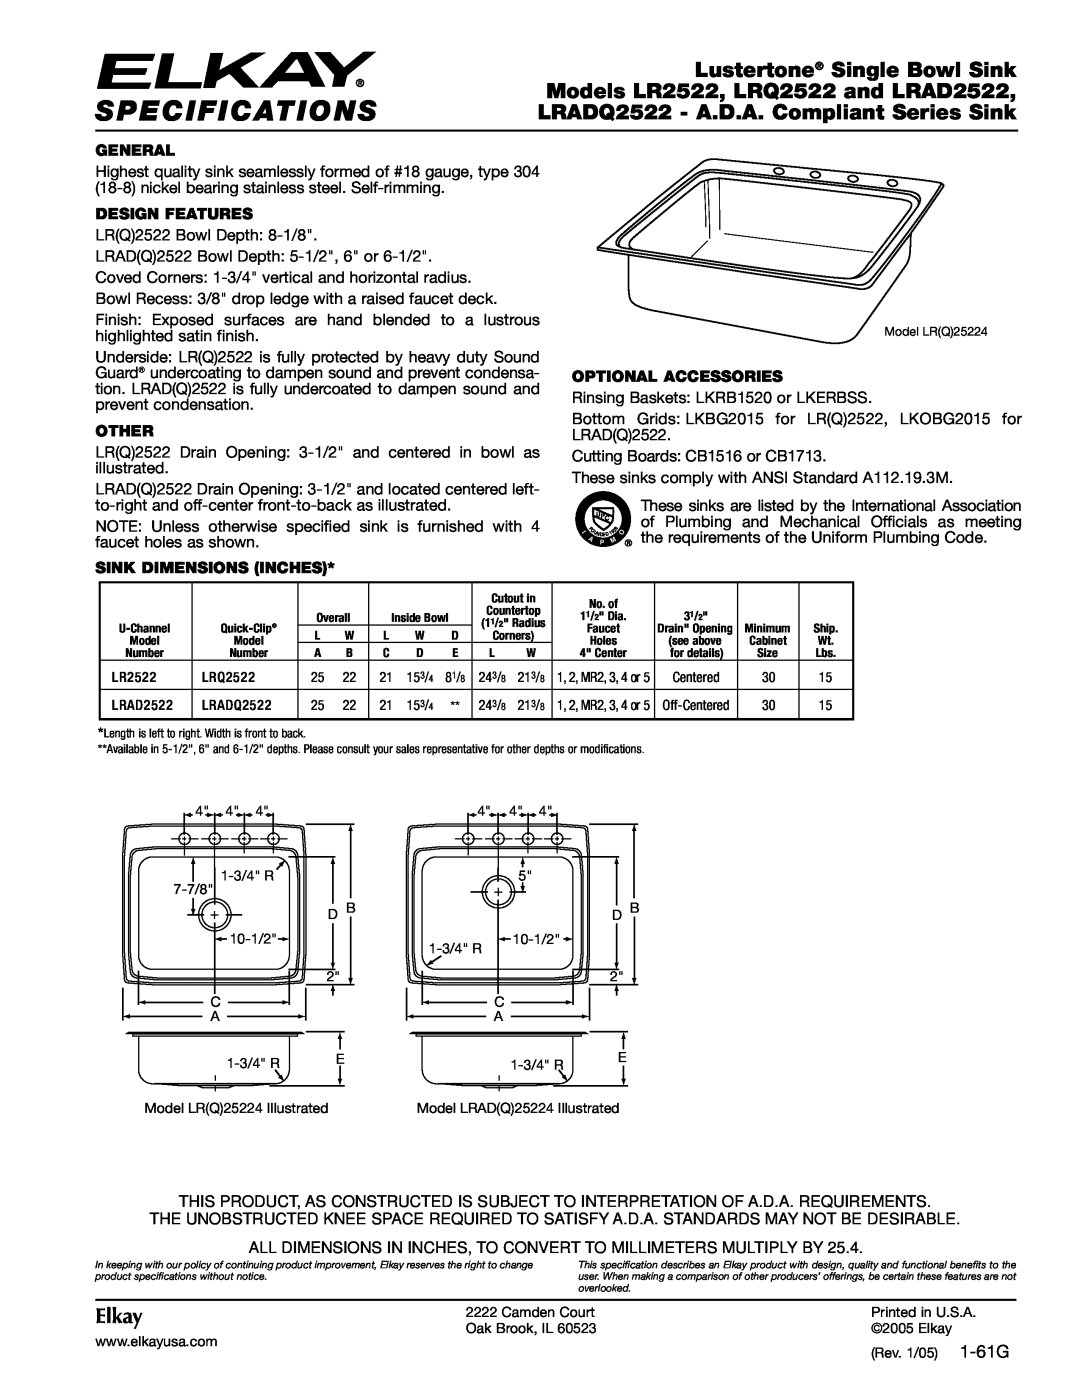 Elkay specifications Specifications, Lustertone Single Bowl Sink, Models LR2522, LRQ2522 and LRAD2522, Elkay, General 